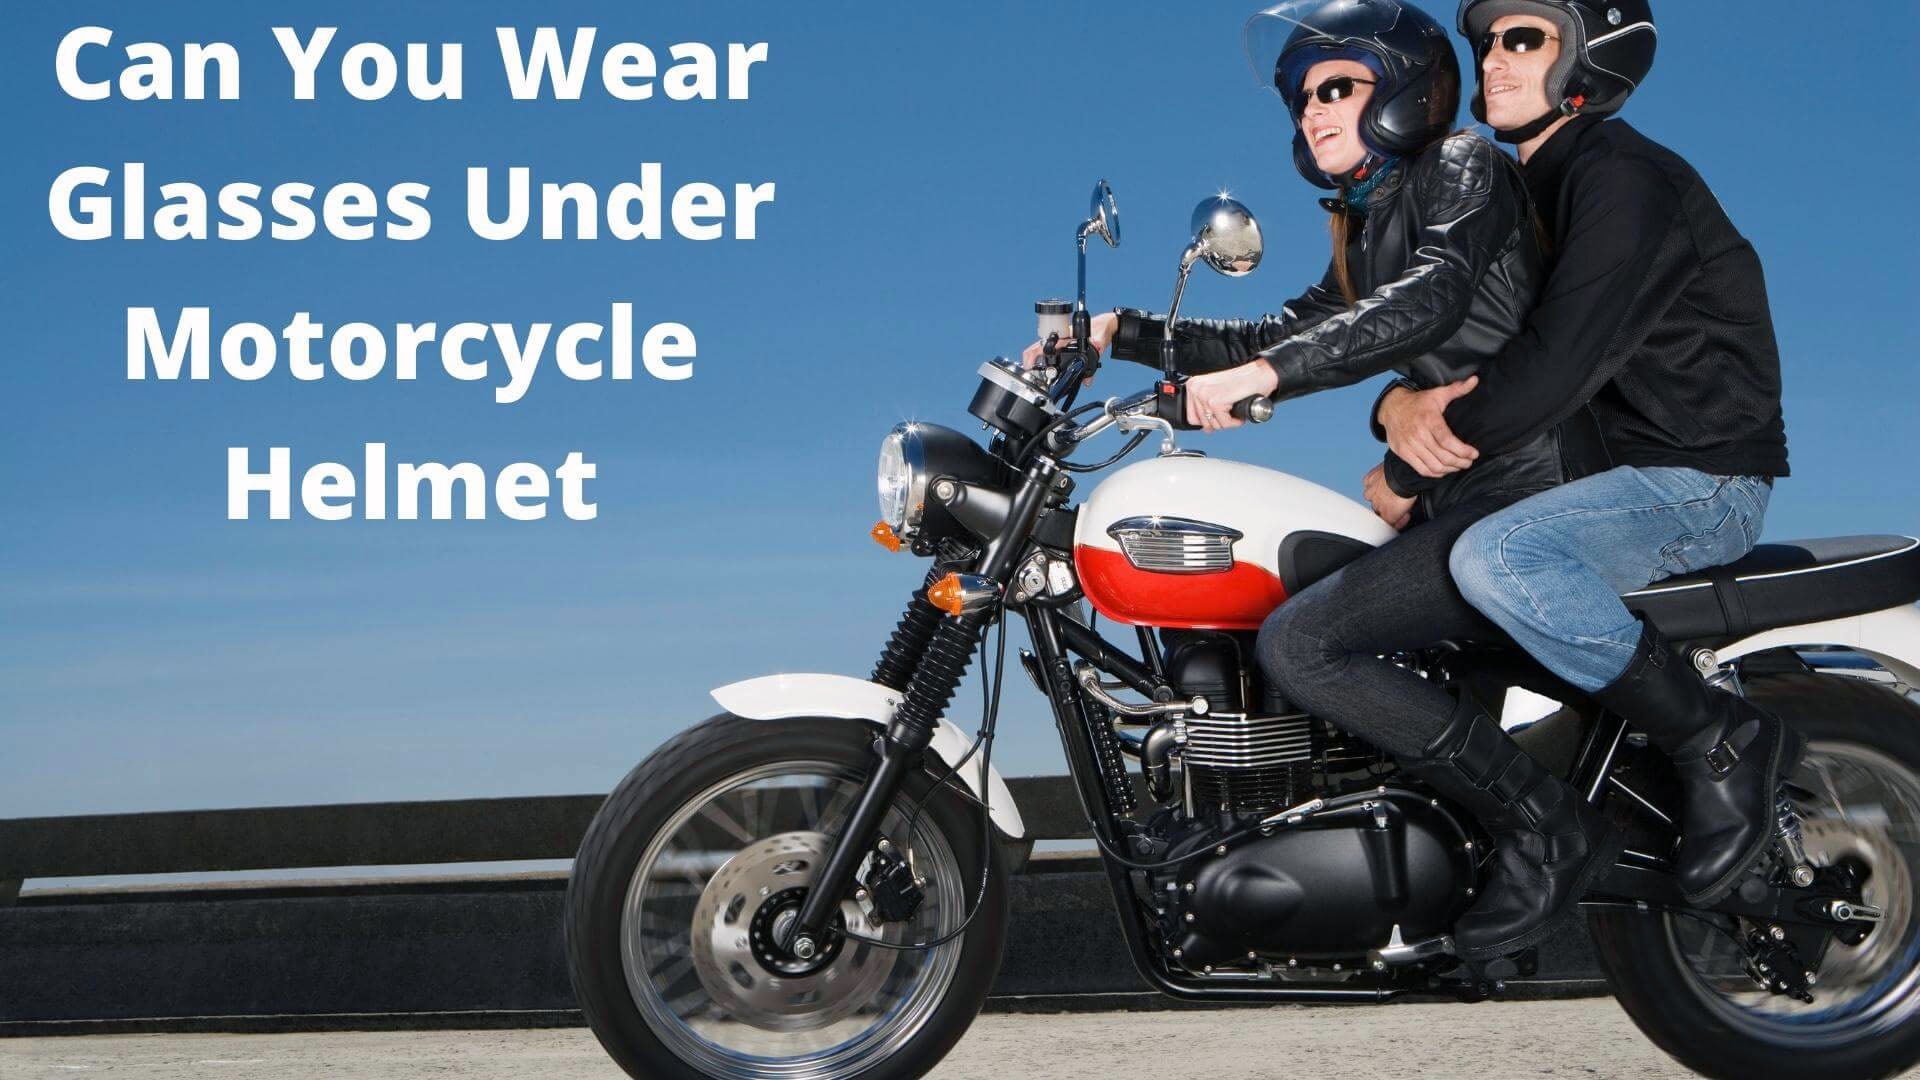 can you wear glasses under motorcycle helmet?